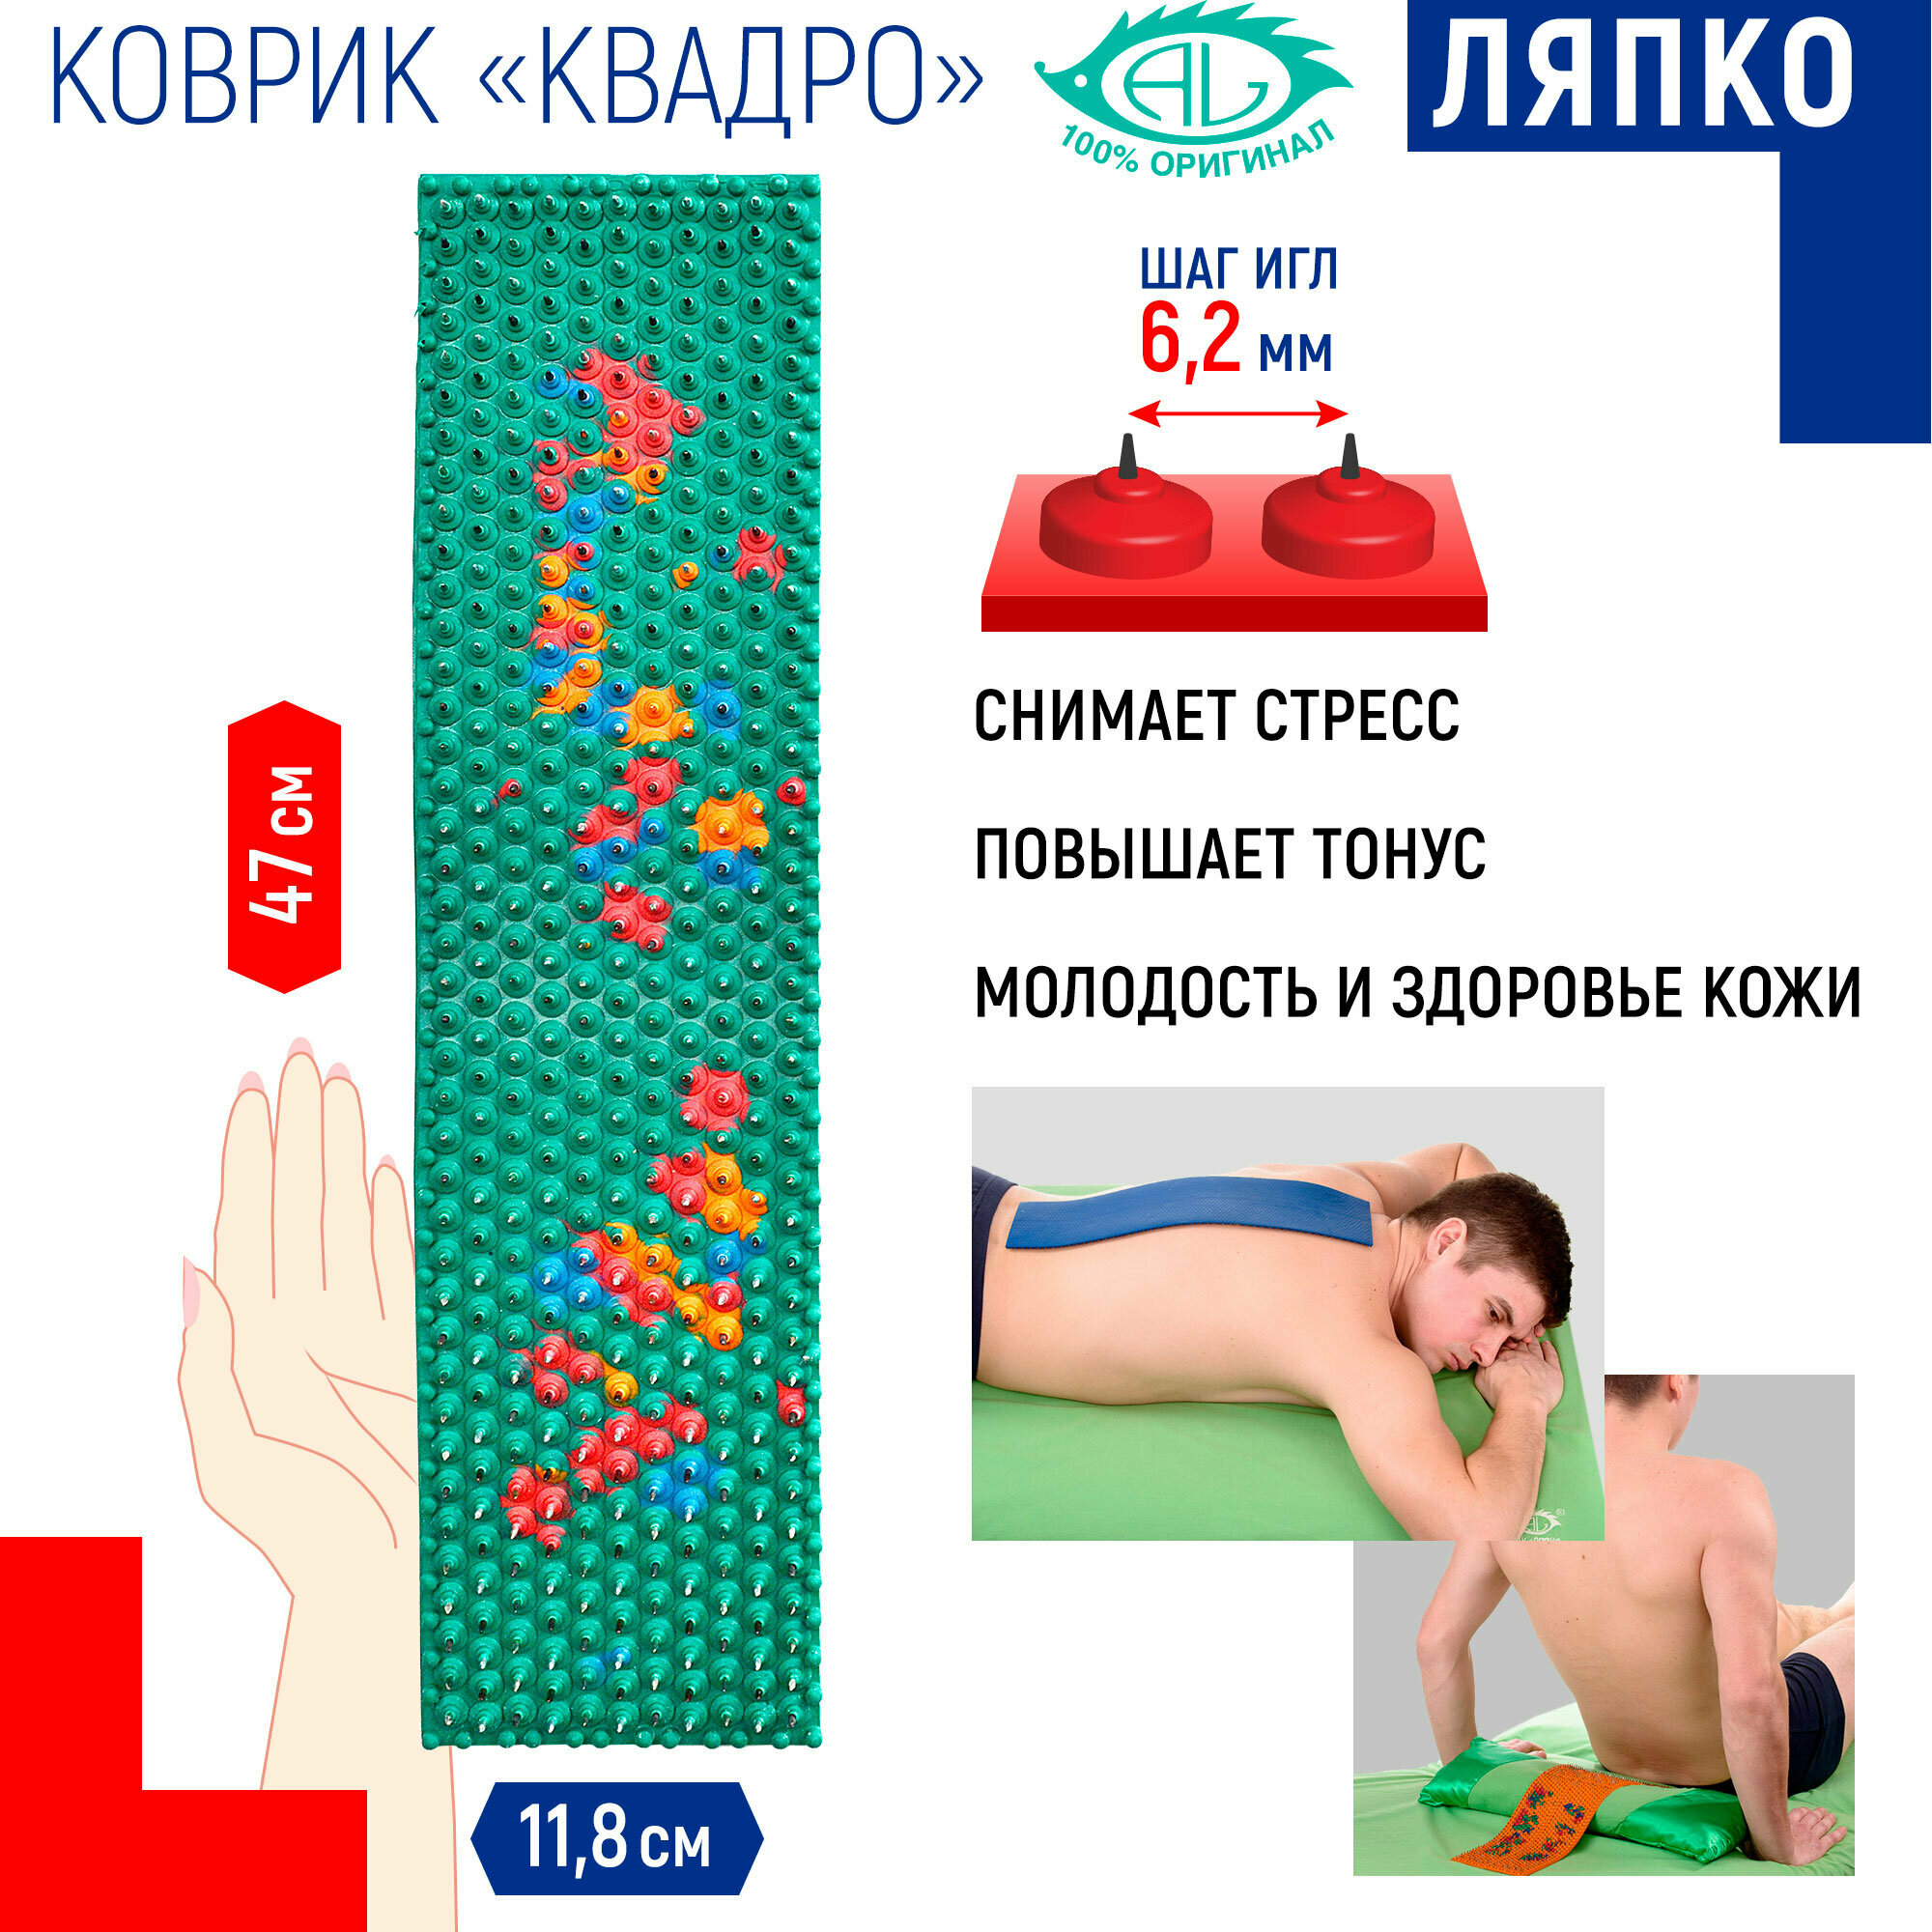 Массажер коврик аппликатор Ляпко Квадро, шаг игл 6.2 мм (47х11.8 см)